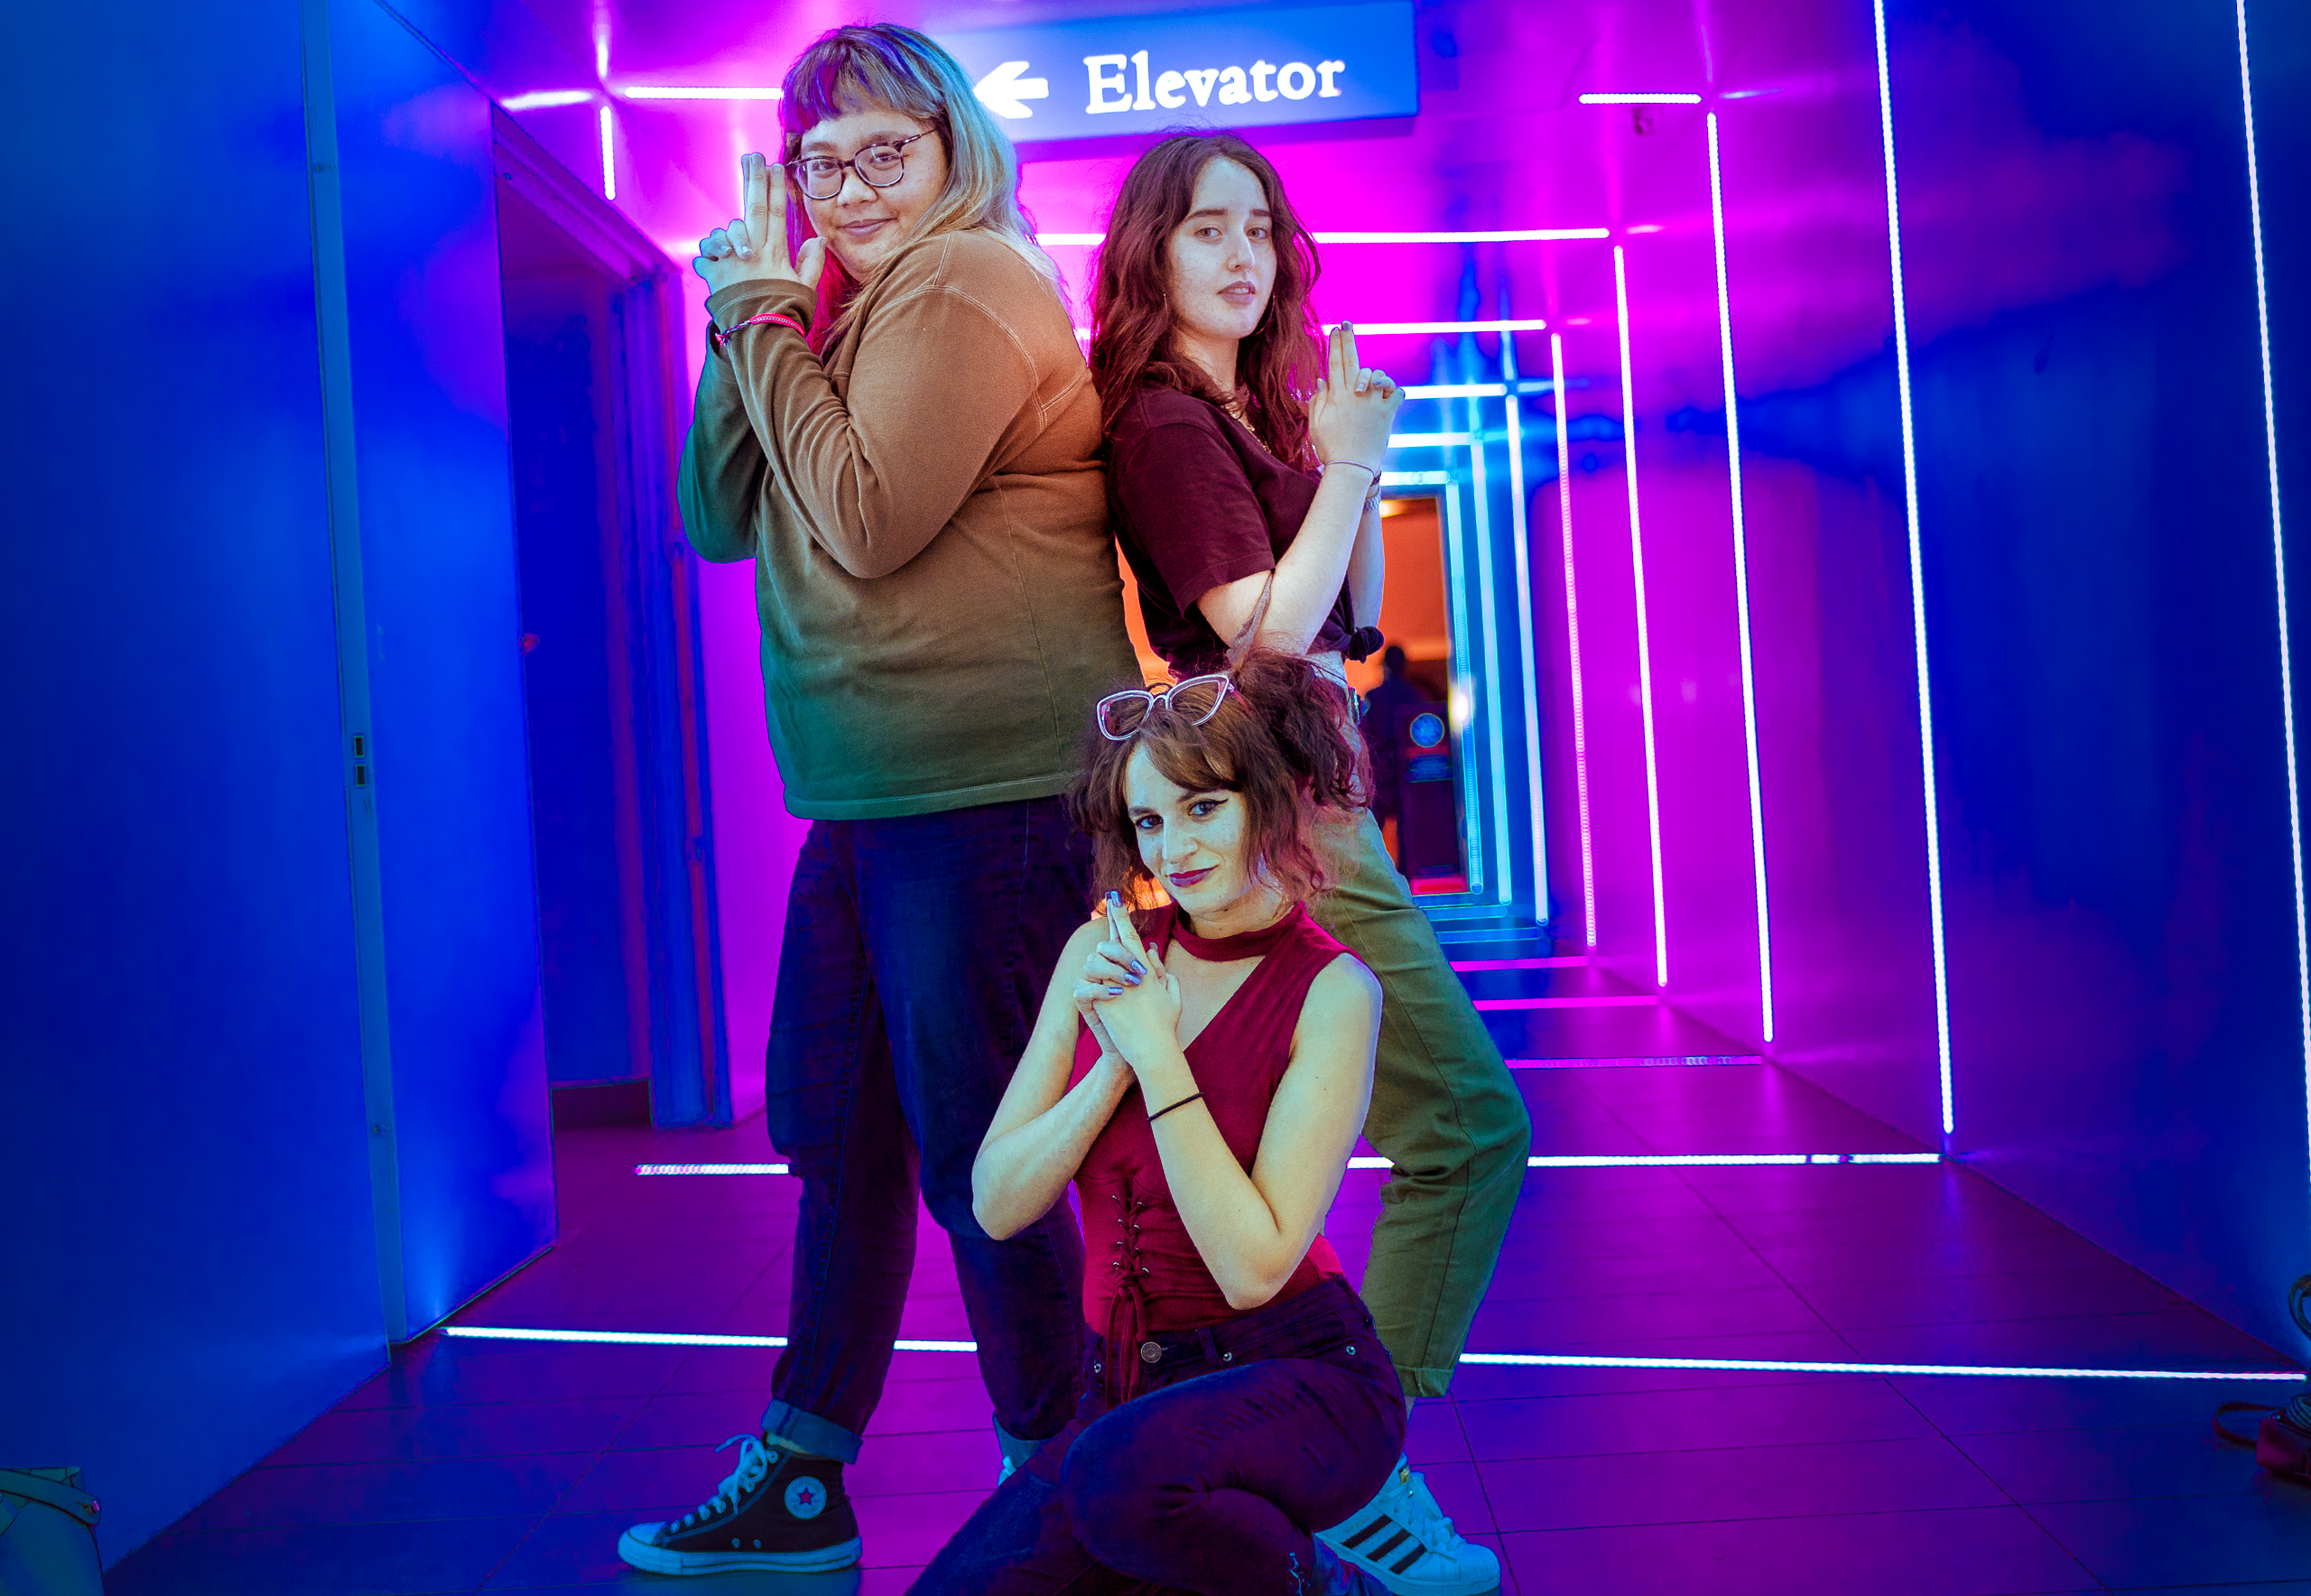 three women pose "like Charlie's Angels" in a neon-lit corridor in Little Tokyo in Los Angeles